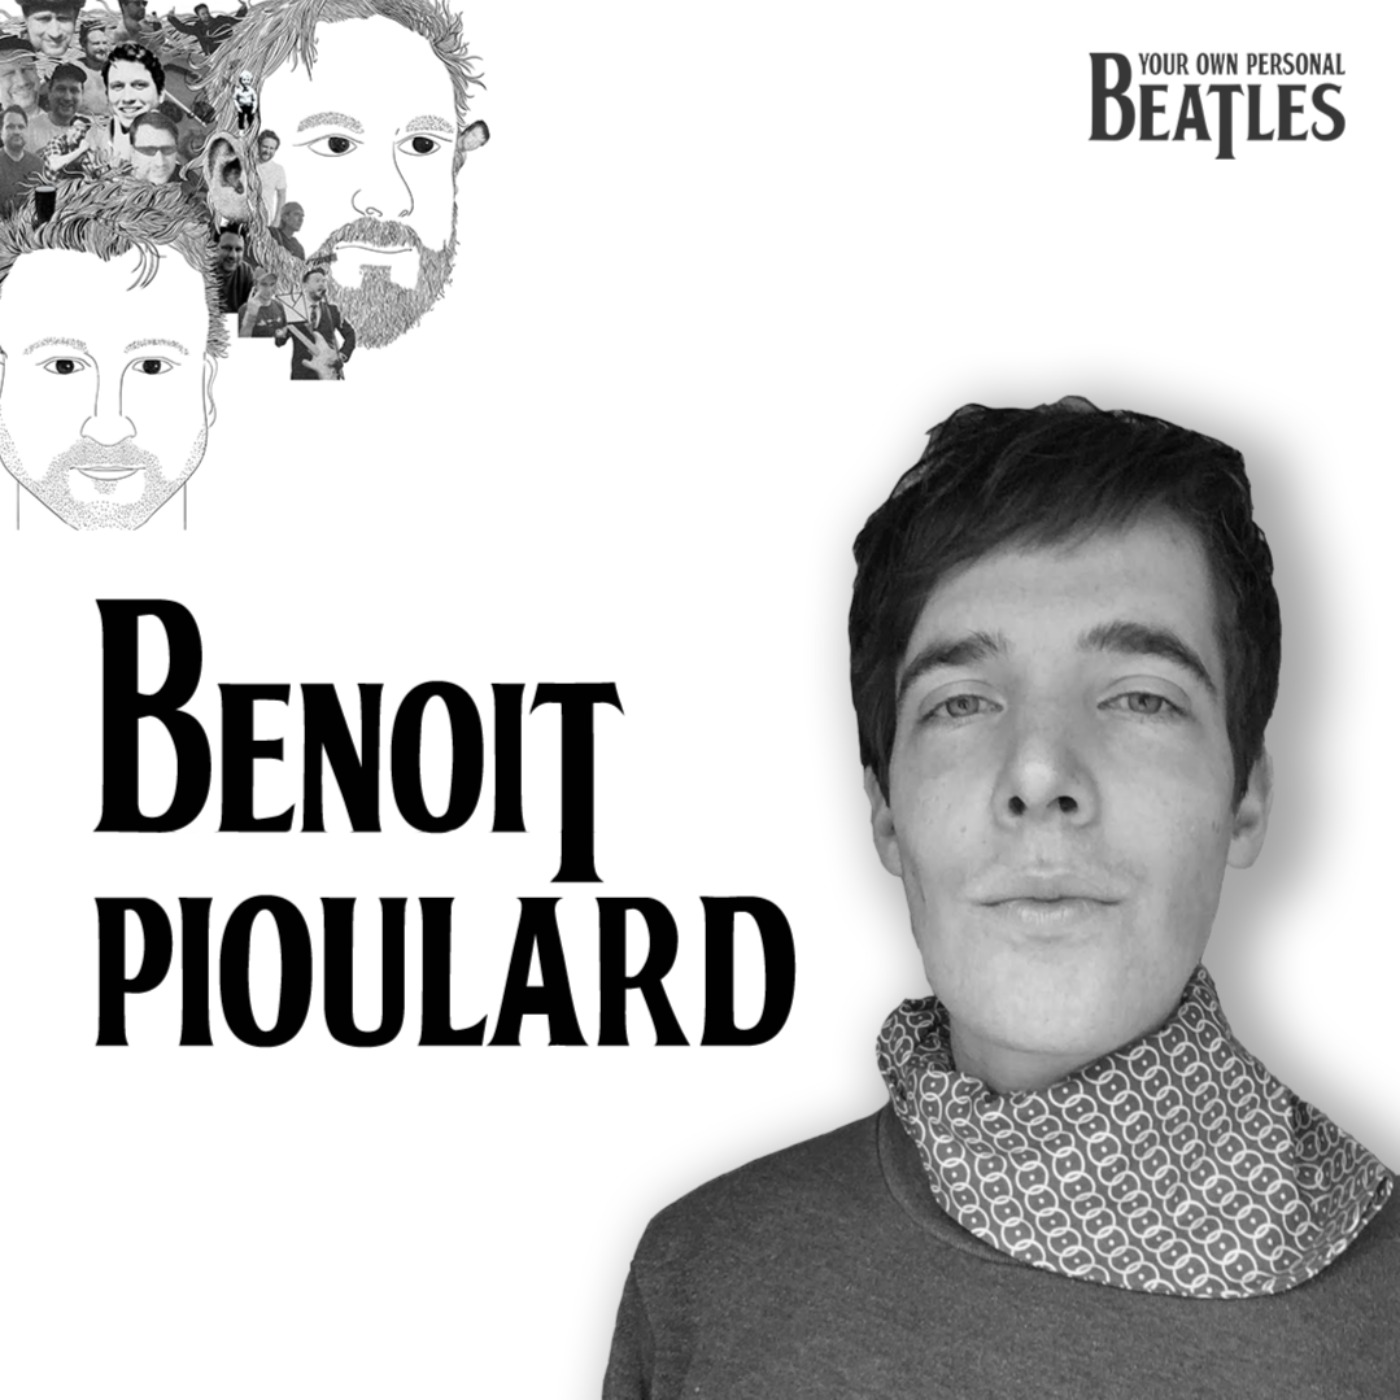 Benoit Pioulard's Personal Beatles